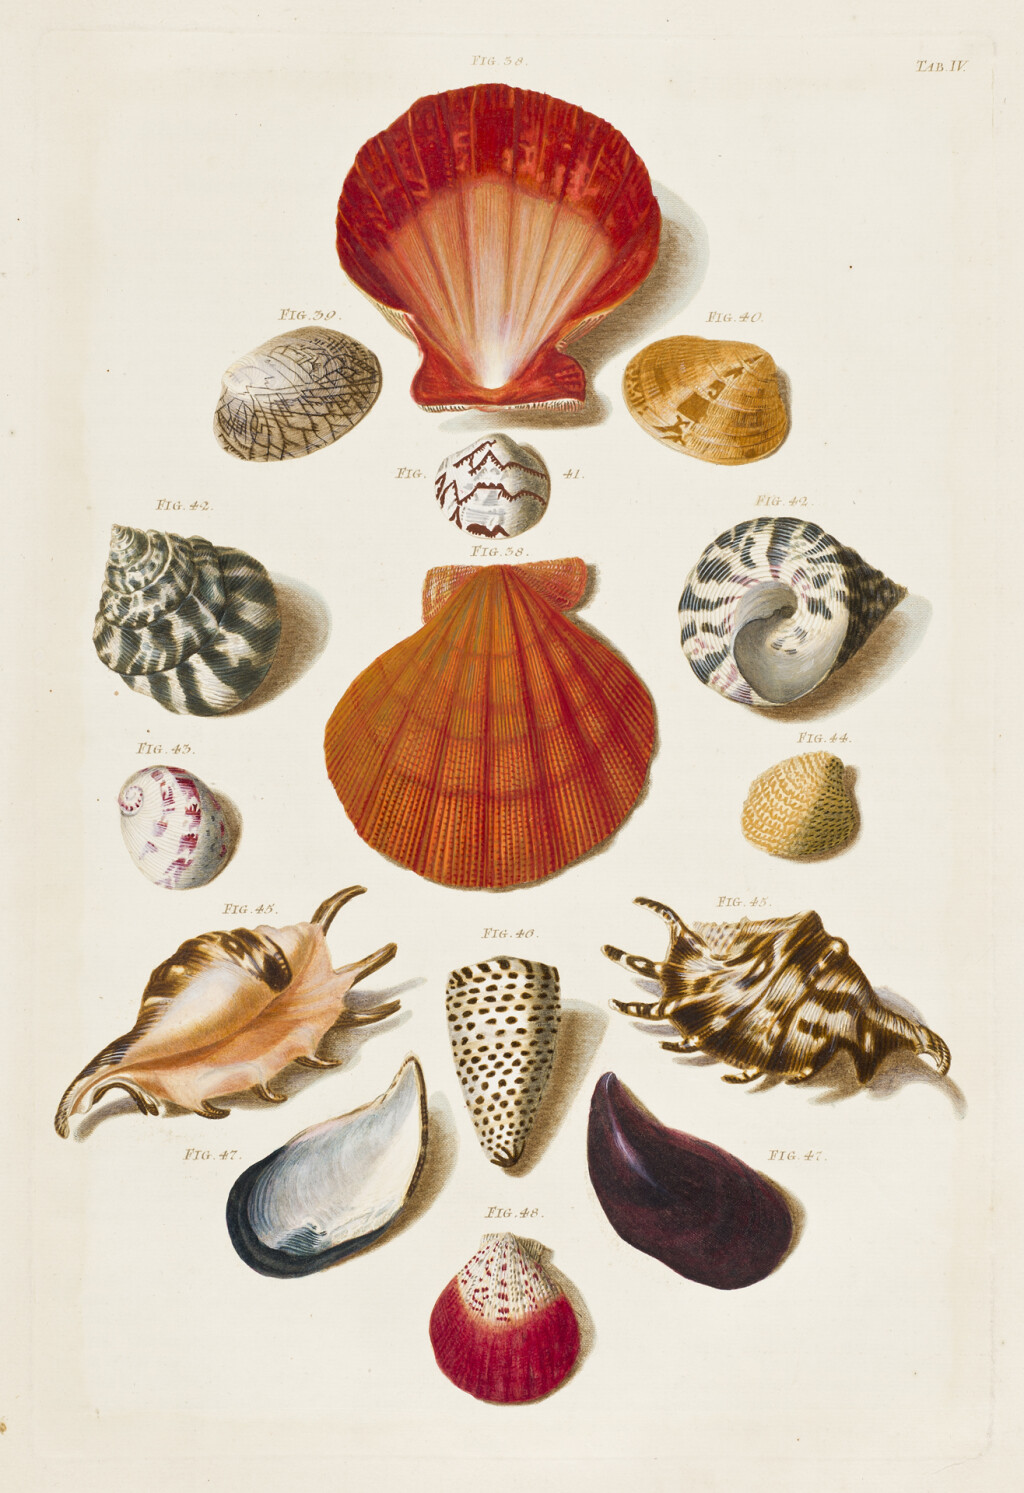 Mollusca illustrations